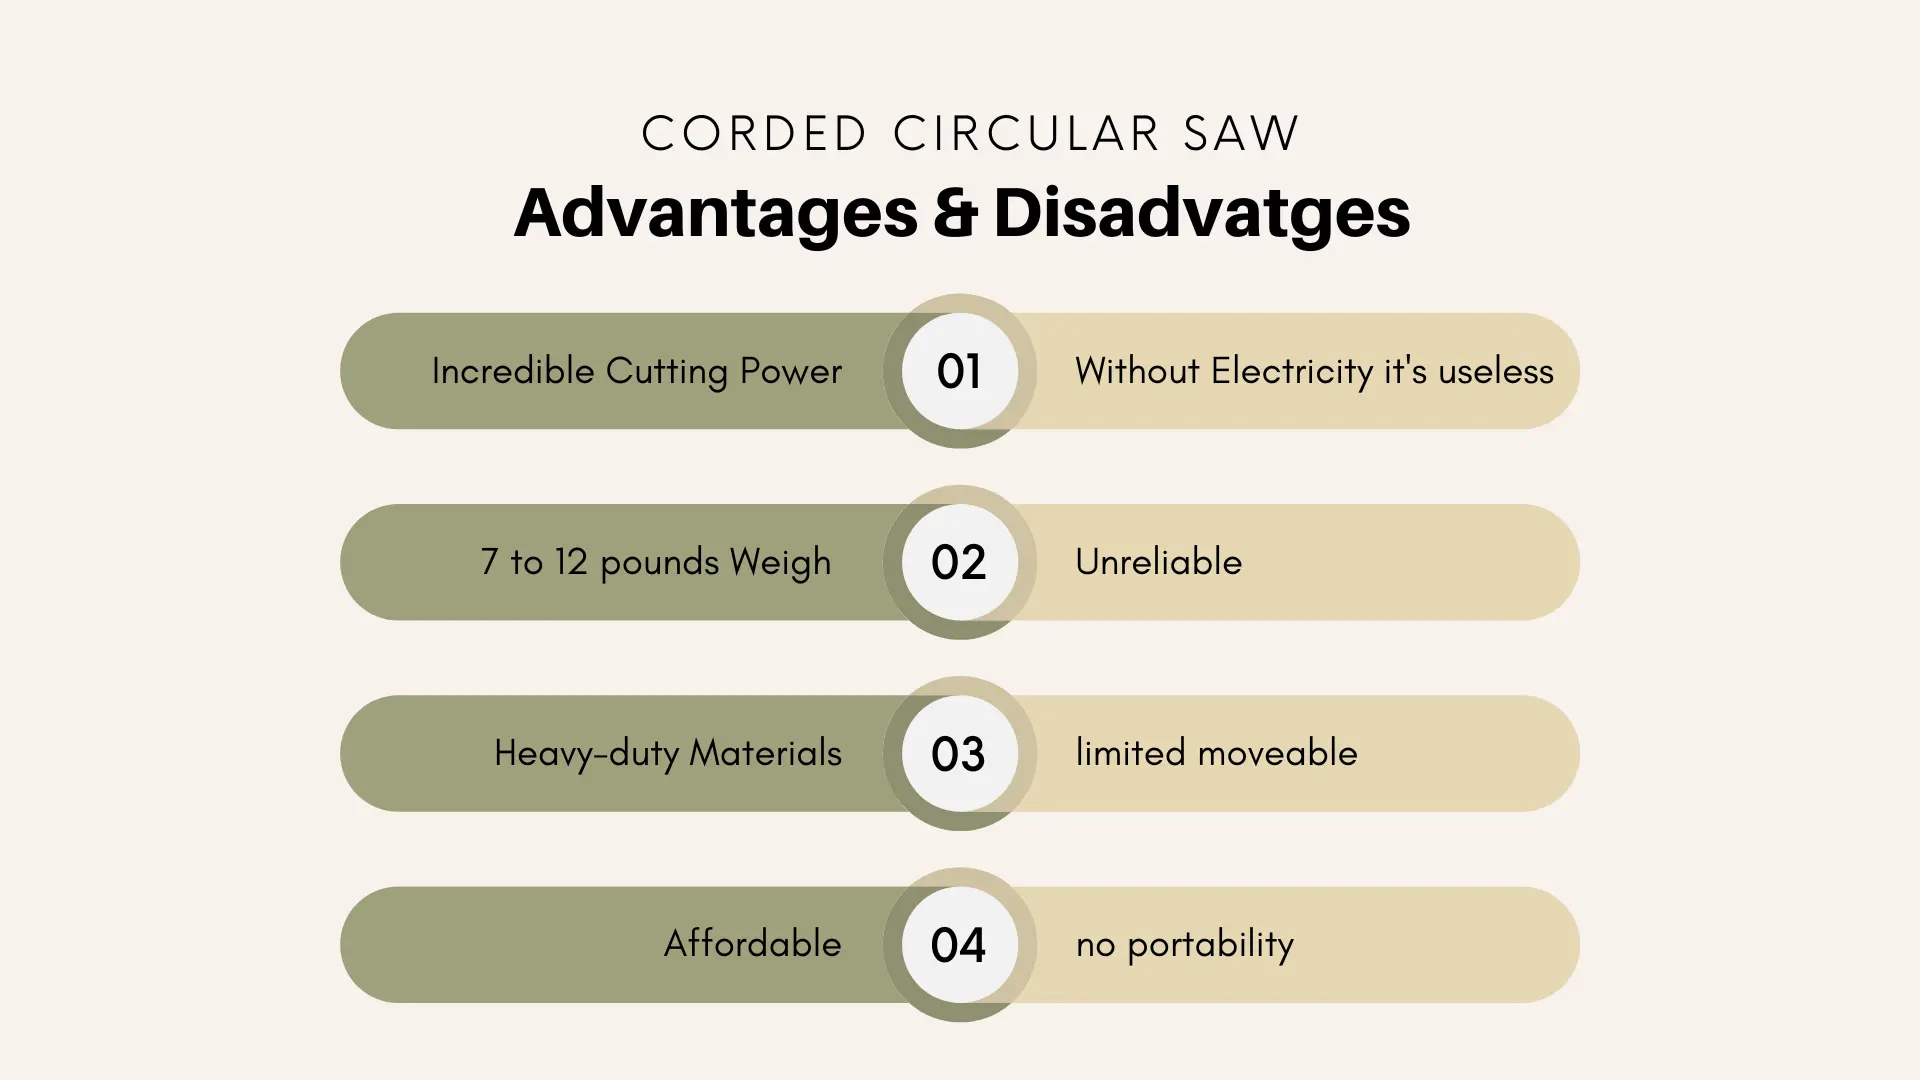 Advantages & Disadvantages of Corded Circular Saw